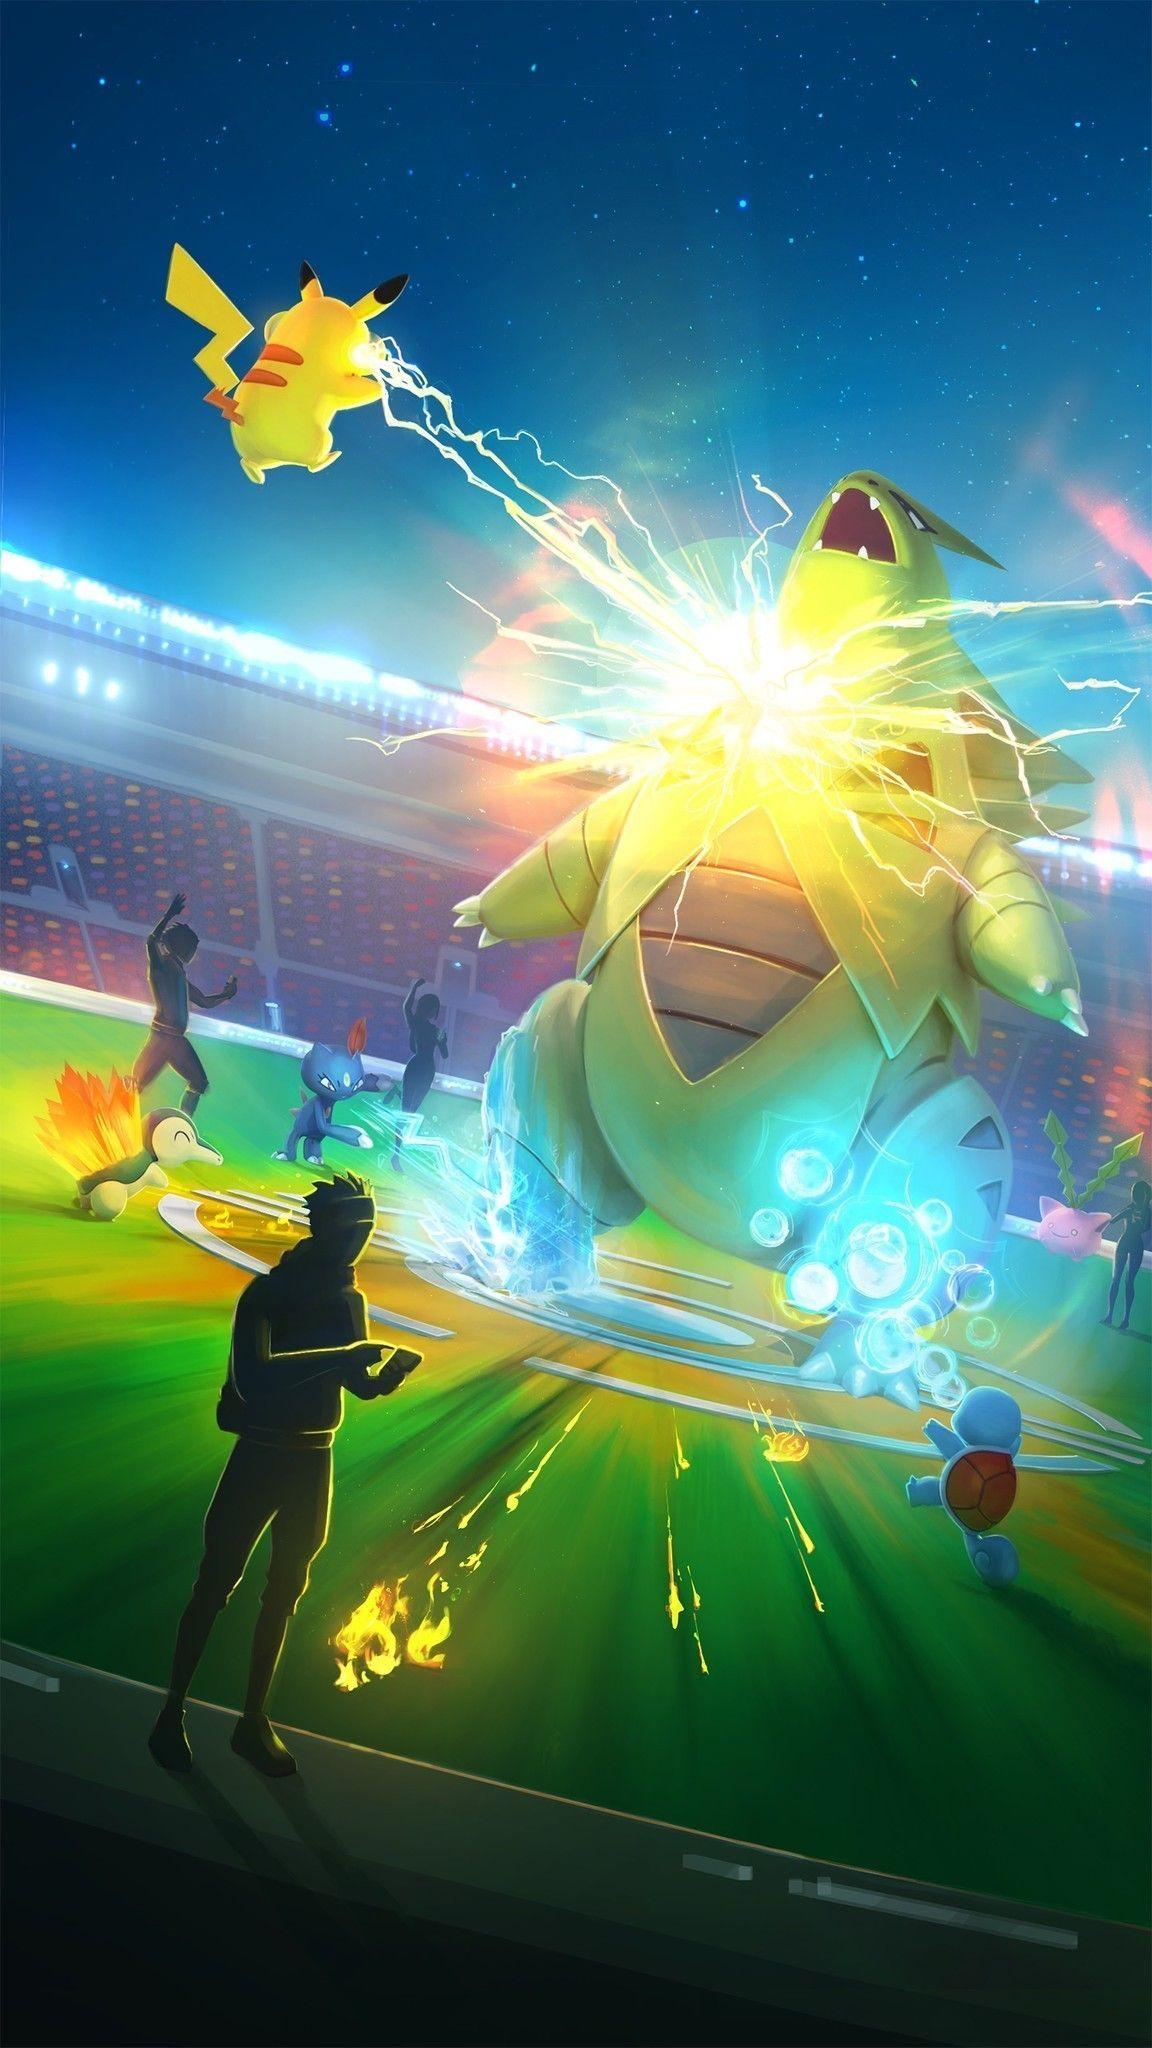 Official Pokémon Go wallpaper for 2019